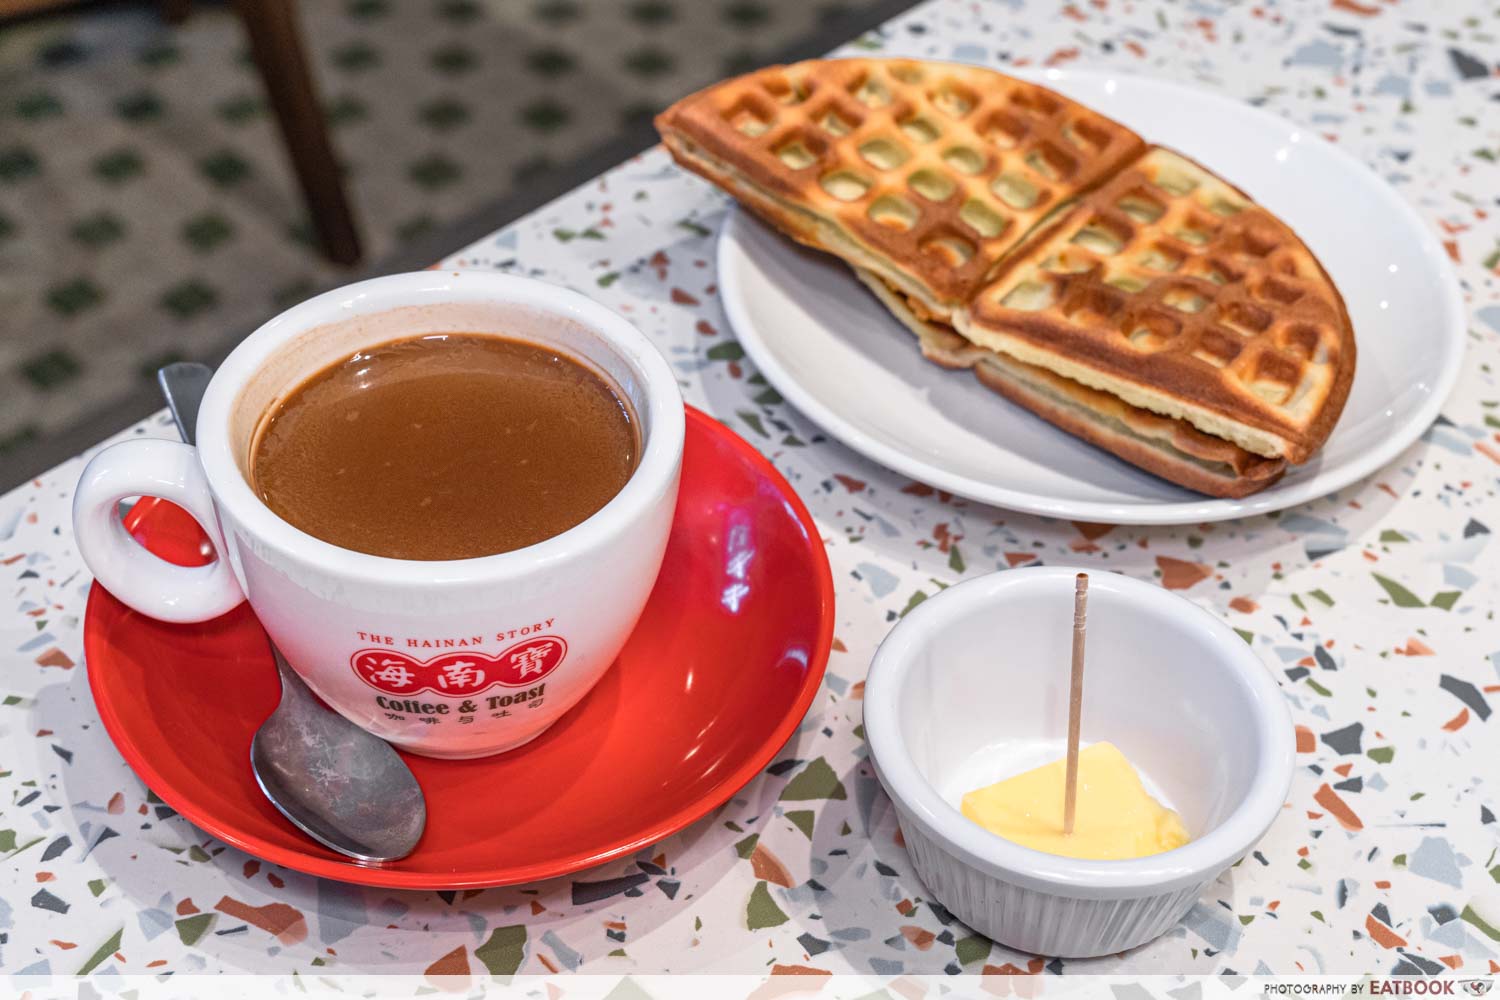 the-hainan-story-coffee-house-waffle